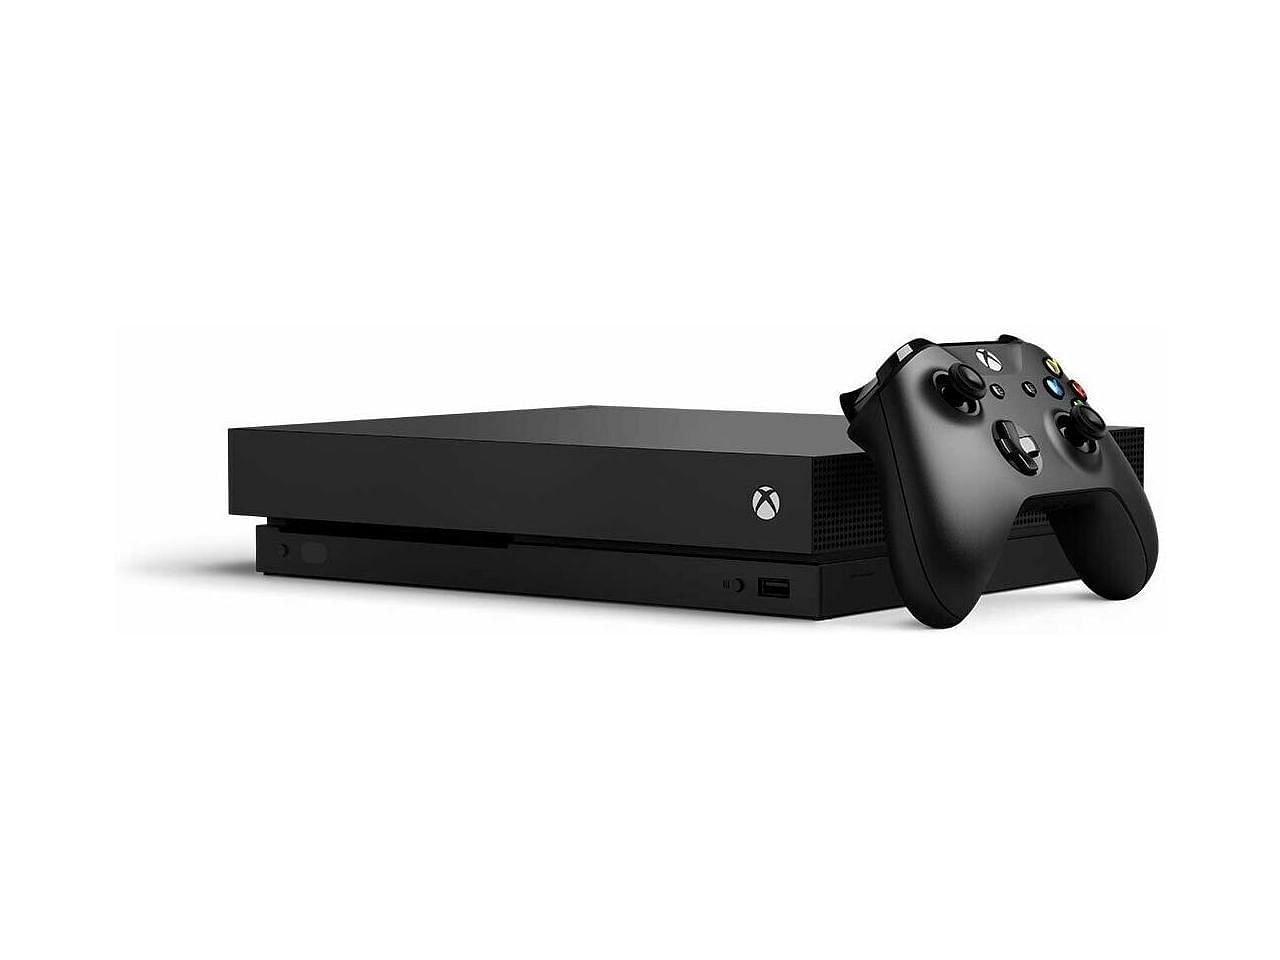 The Xbox One X 4K Ultra HD gaming console (Image via Newegg)